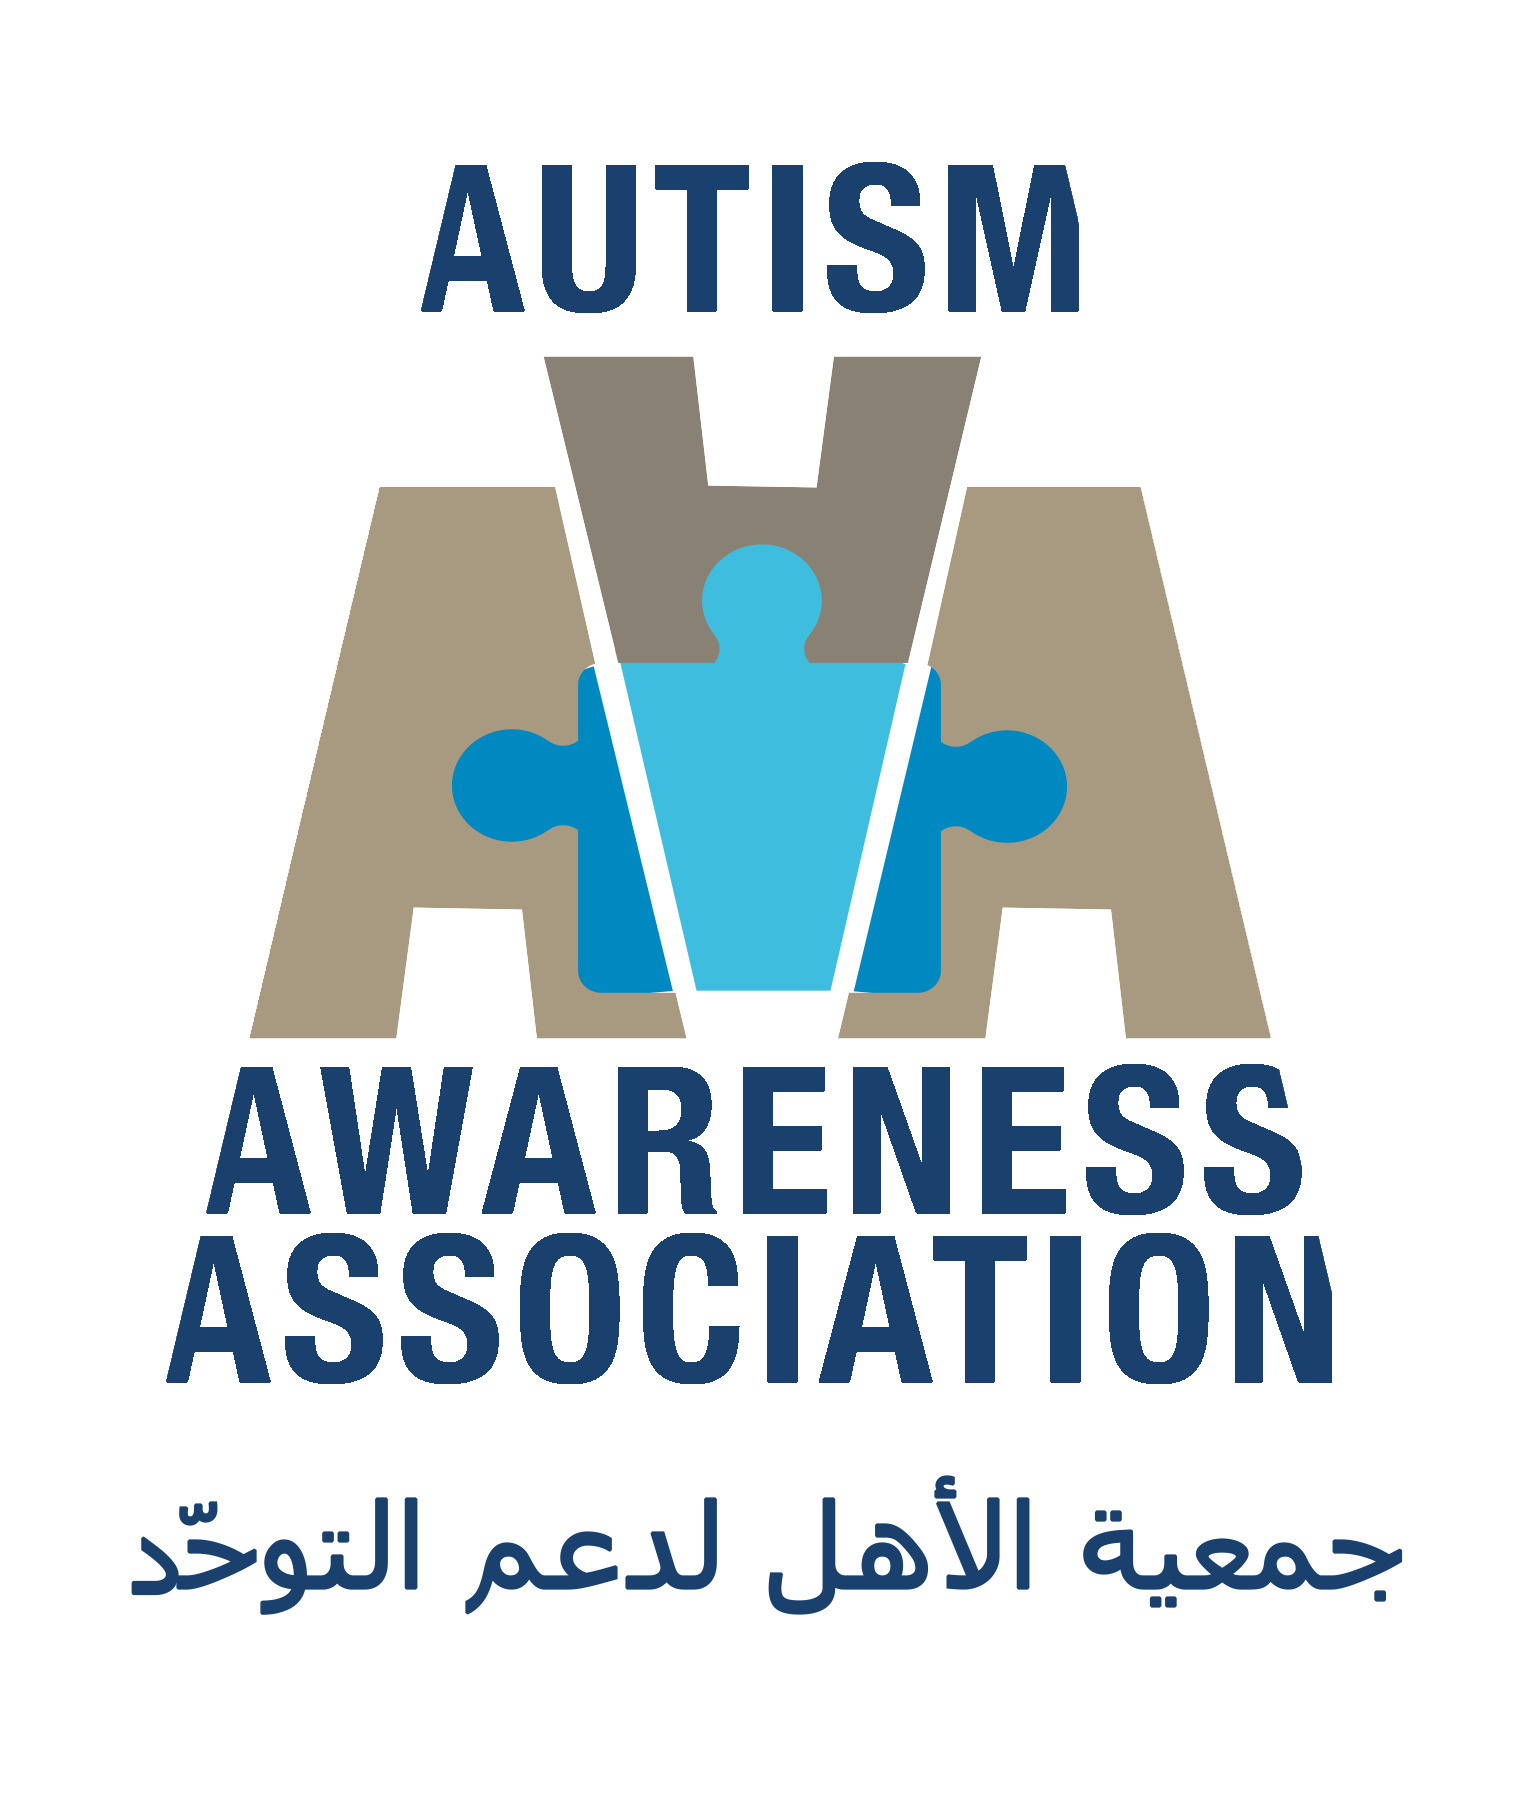 AAA - Autism Awareness Association Lebanon